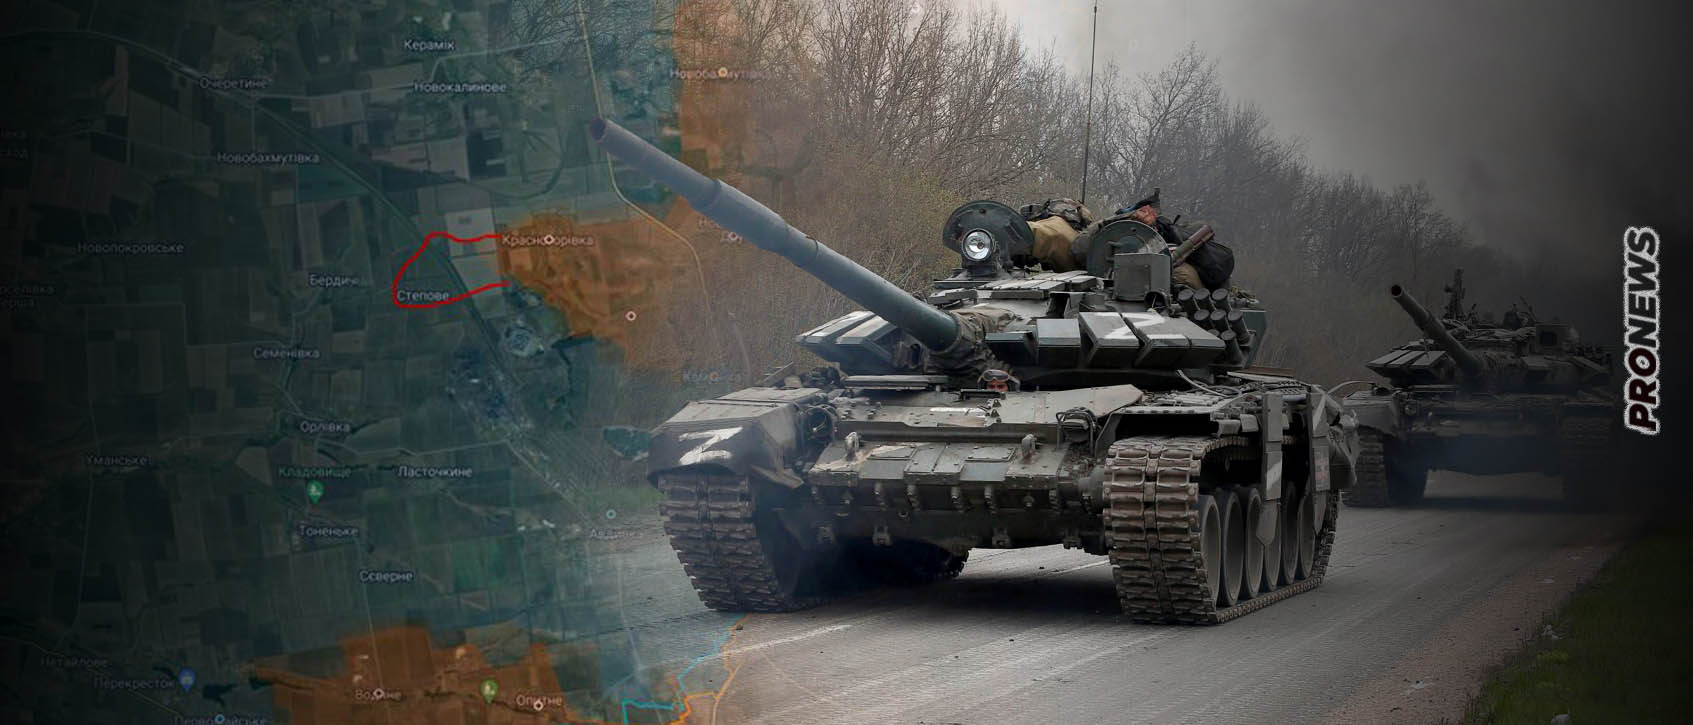 Oι Ρώσοι μπήκαν στην Αβντίιβκα – Σφοδρές μάχες – Επιχειρούν να καταλάβουν και την Ορλίβκα για να αποκοπούν οι Ουκρανοί